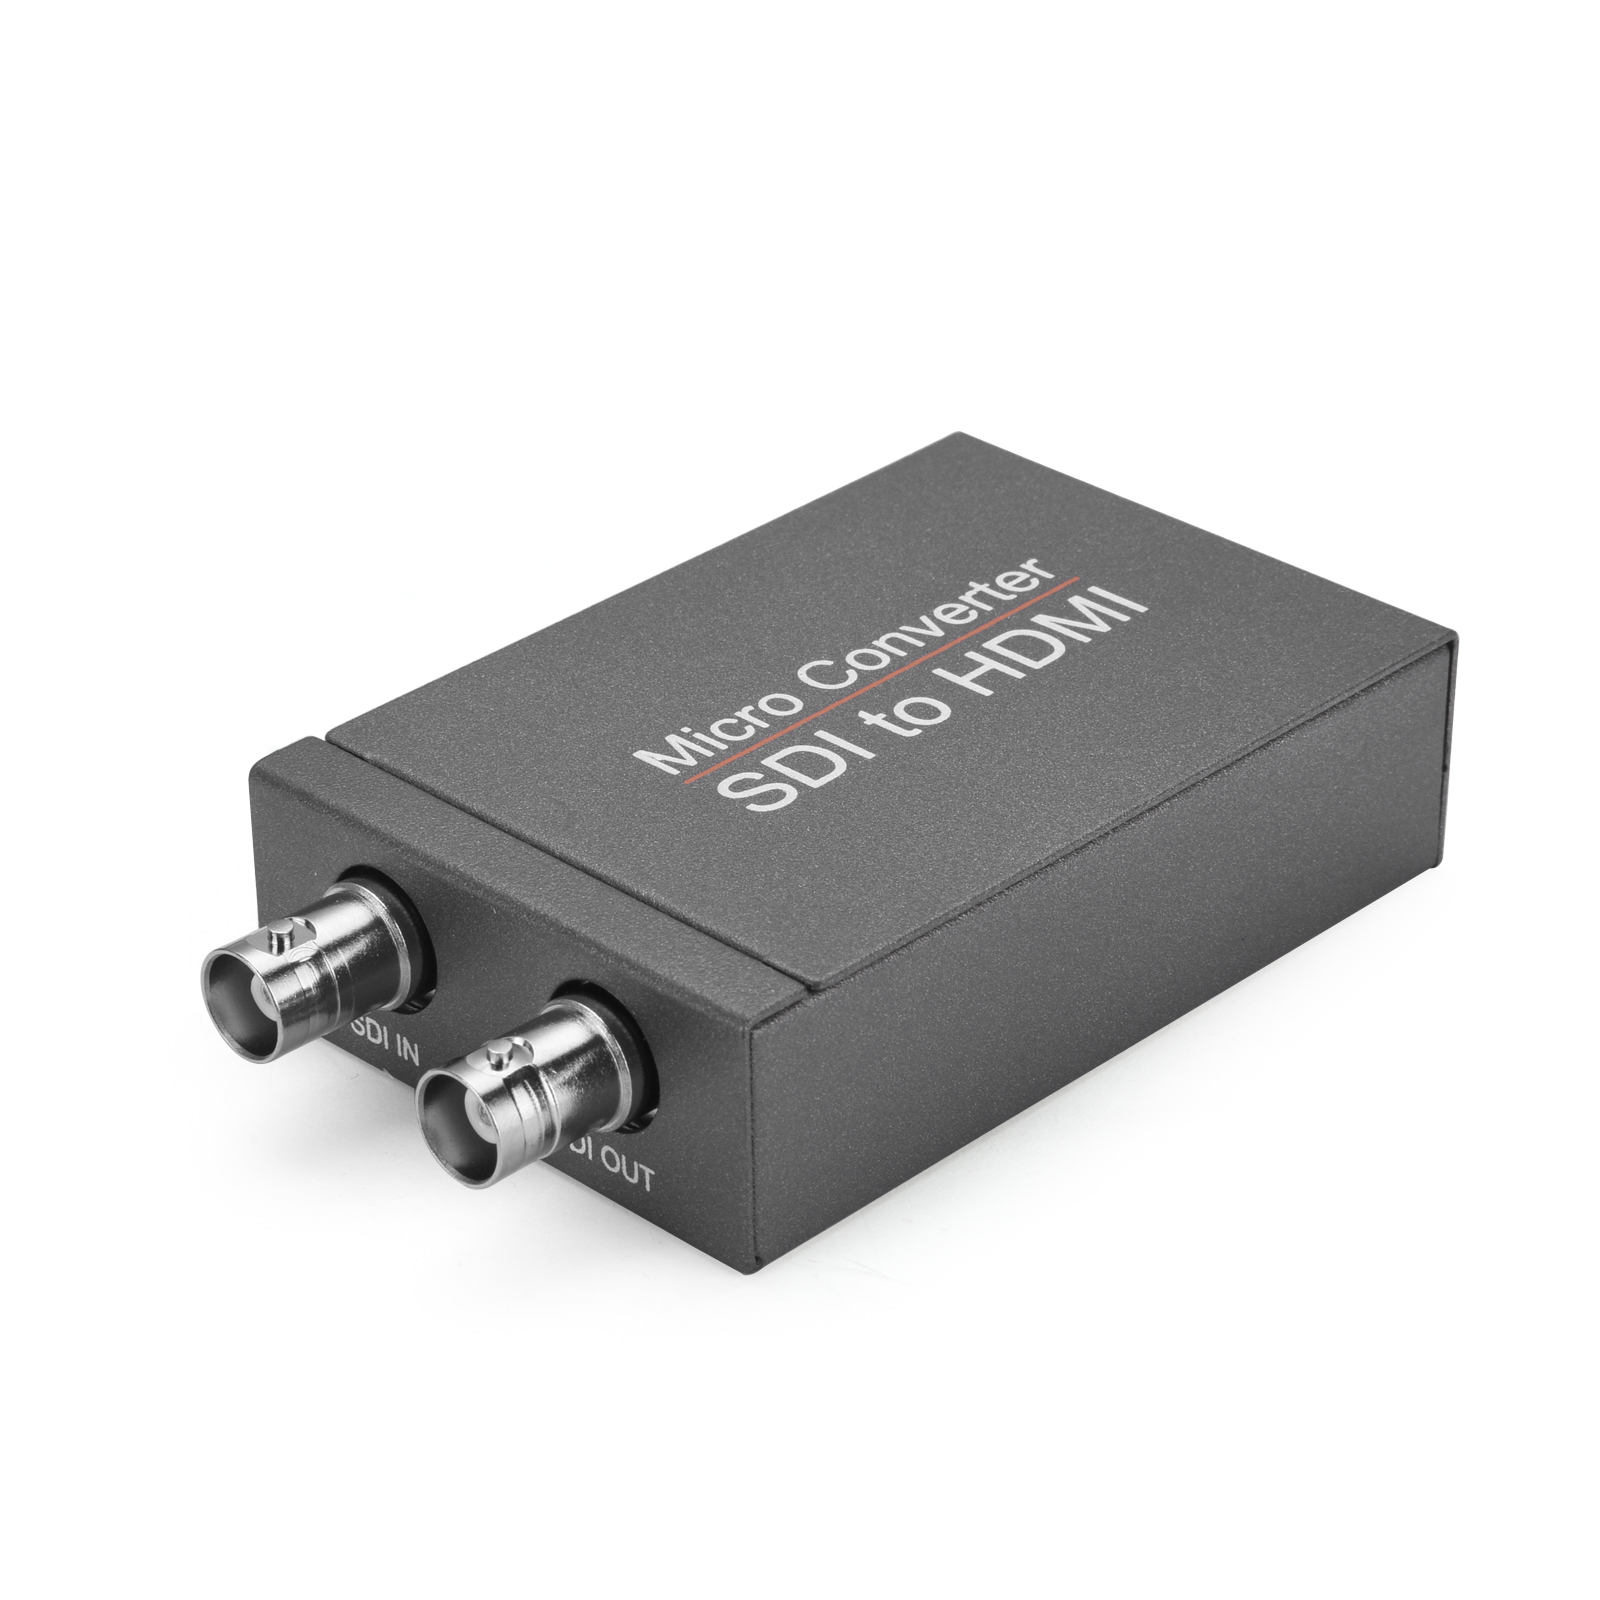 Sdi mini. Переходник HDMI SDI. Blackmagic Design SDI to Audio Mini Converter. 7760056351 SDI 2co.